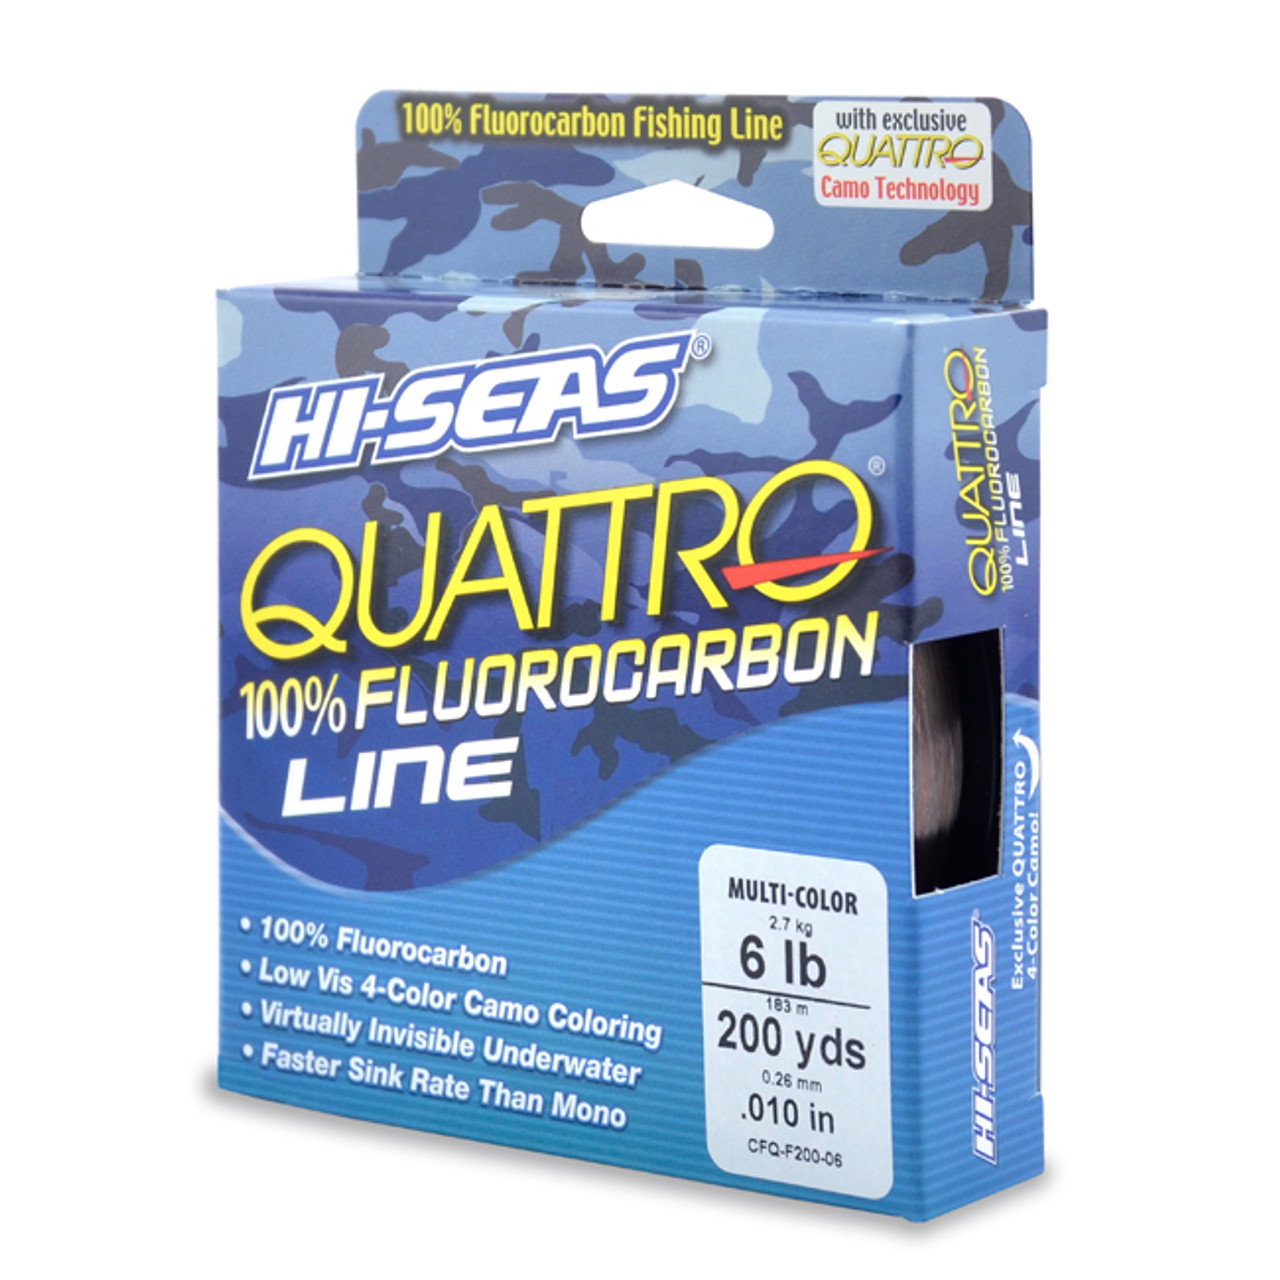 Hi-Seas Quattro Camo Fluorocarbon Line 200yd